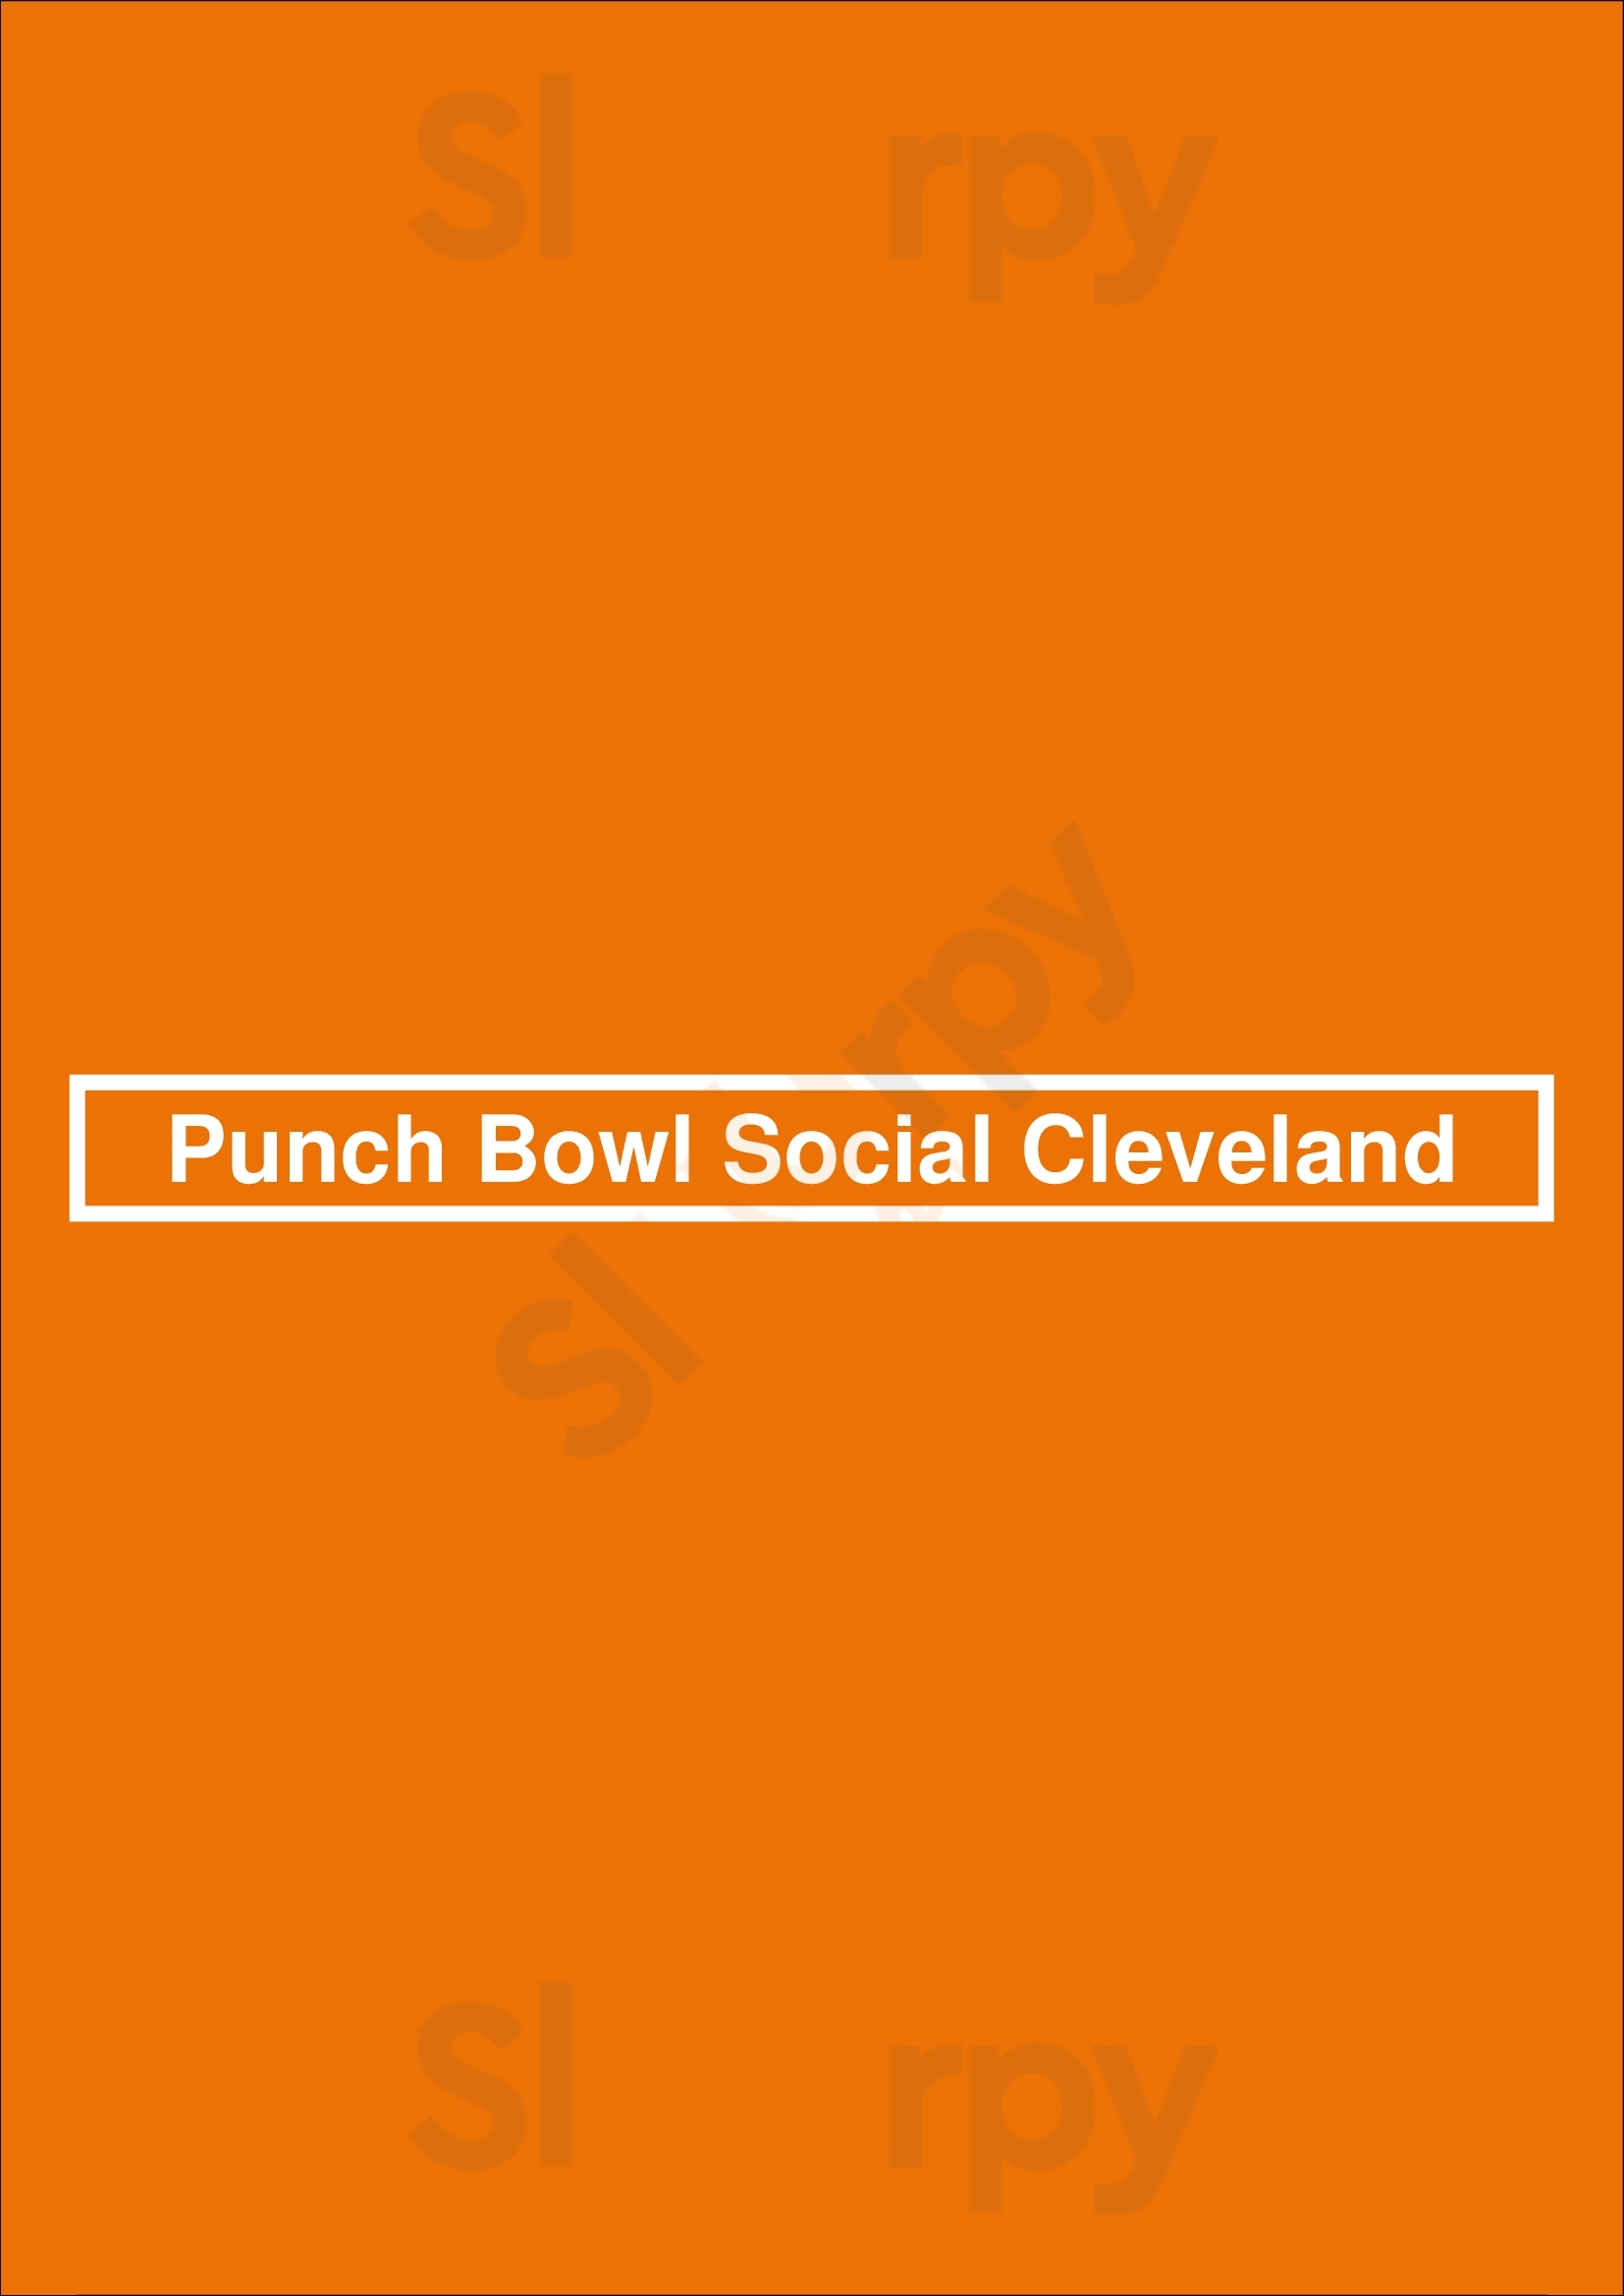 Punch Bowl Social Cleveland Cleveland Menu - 1